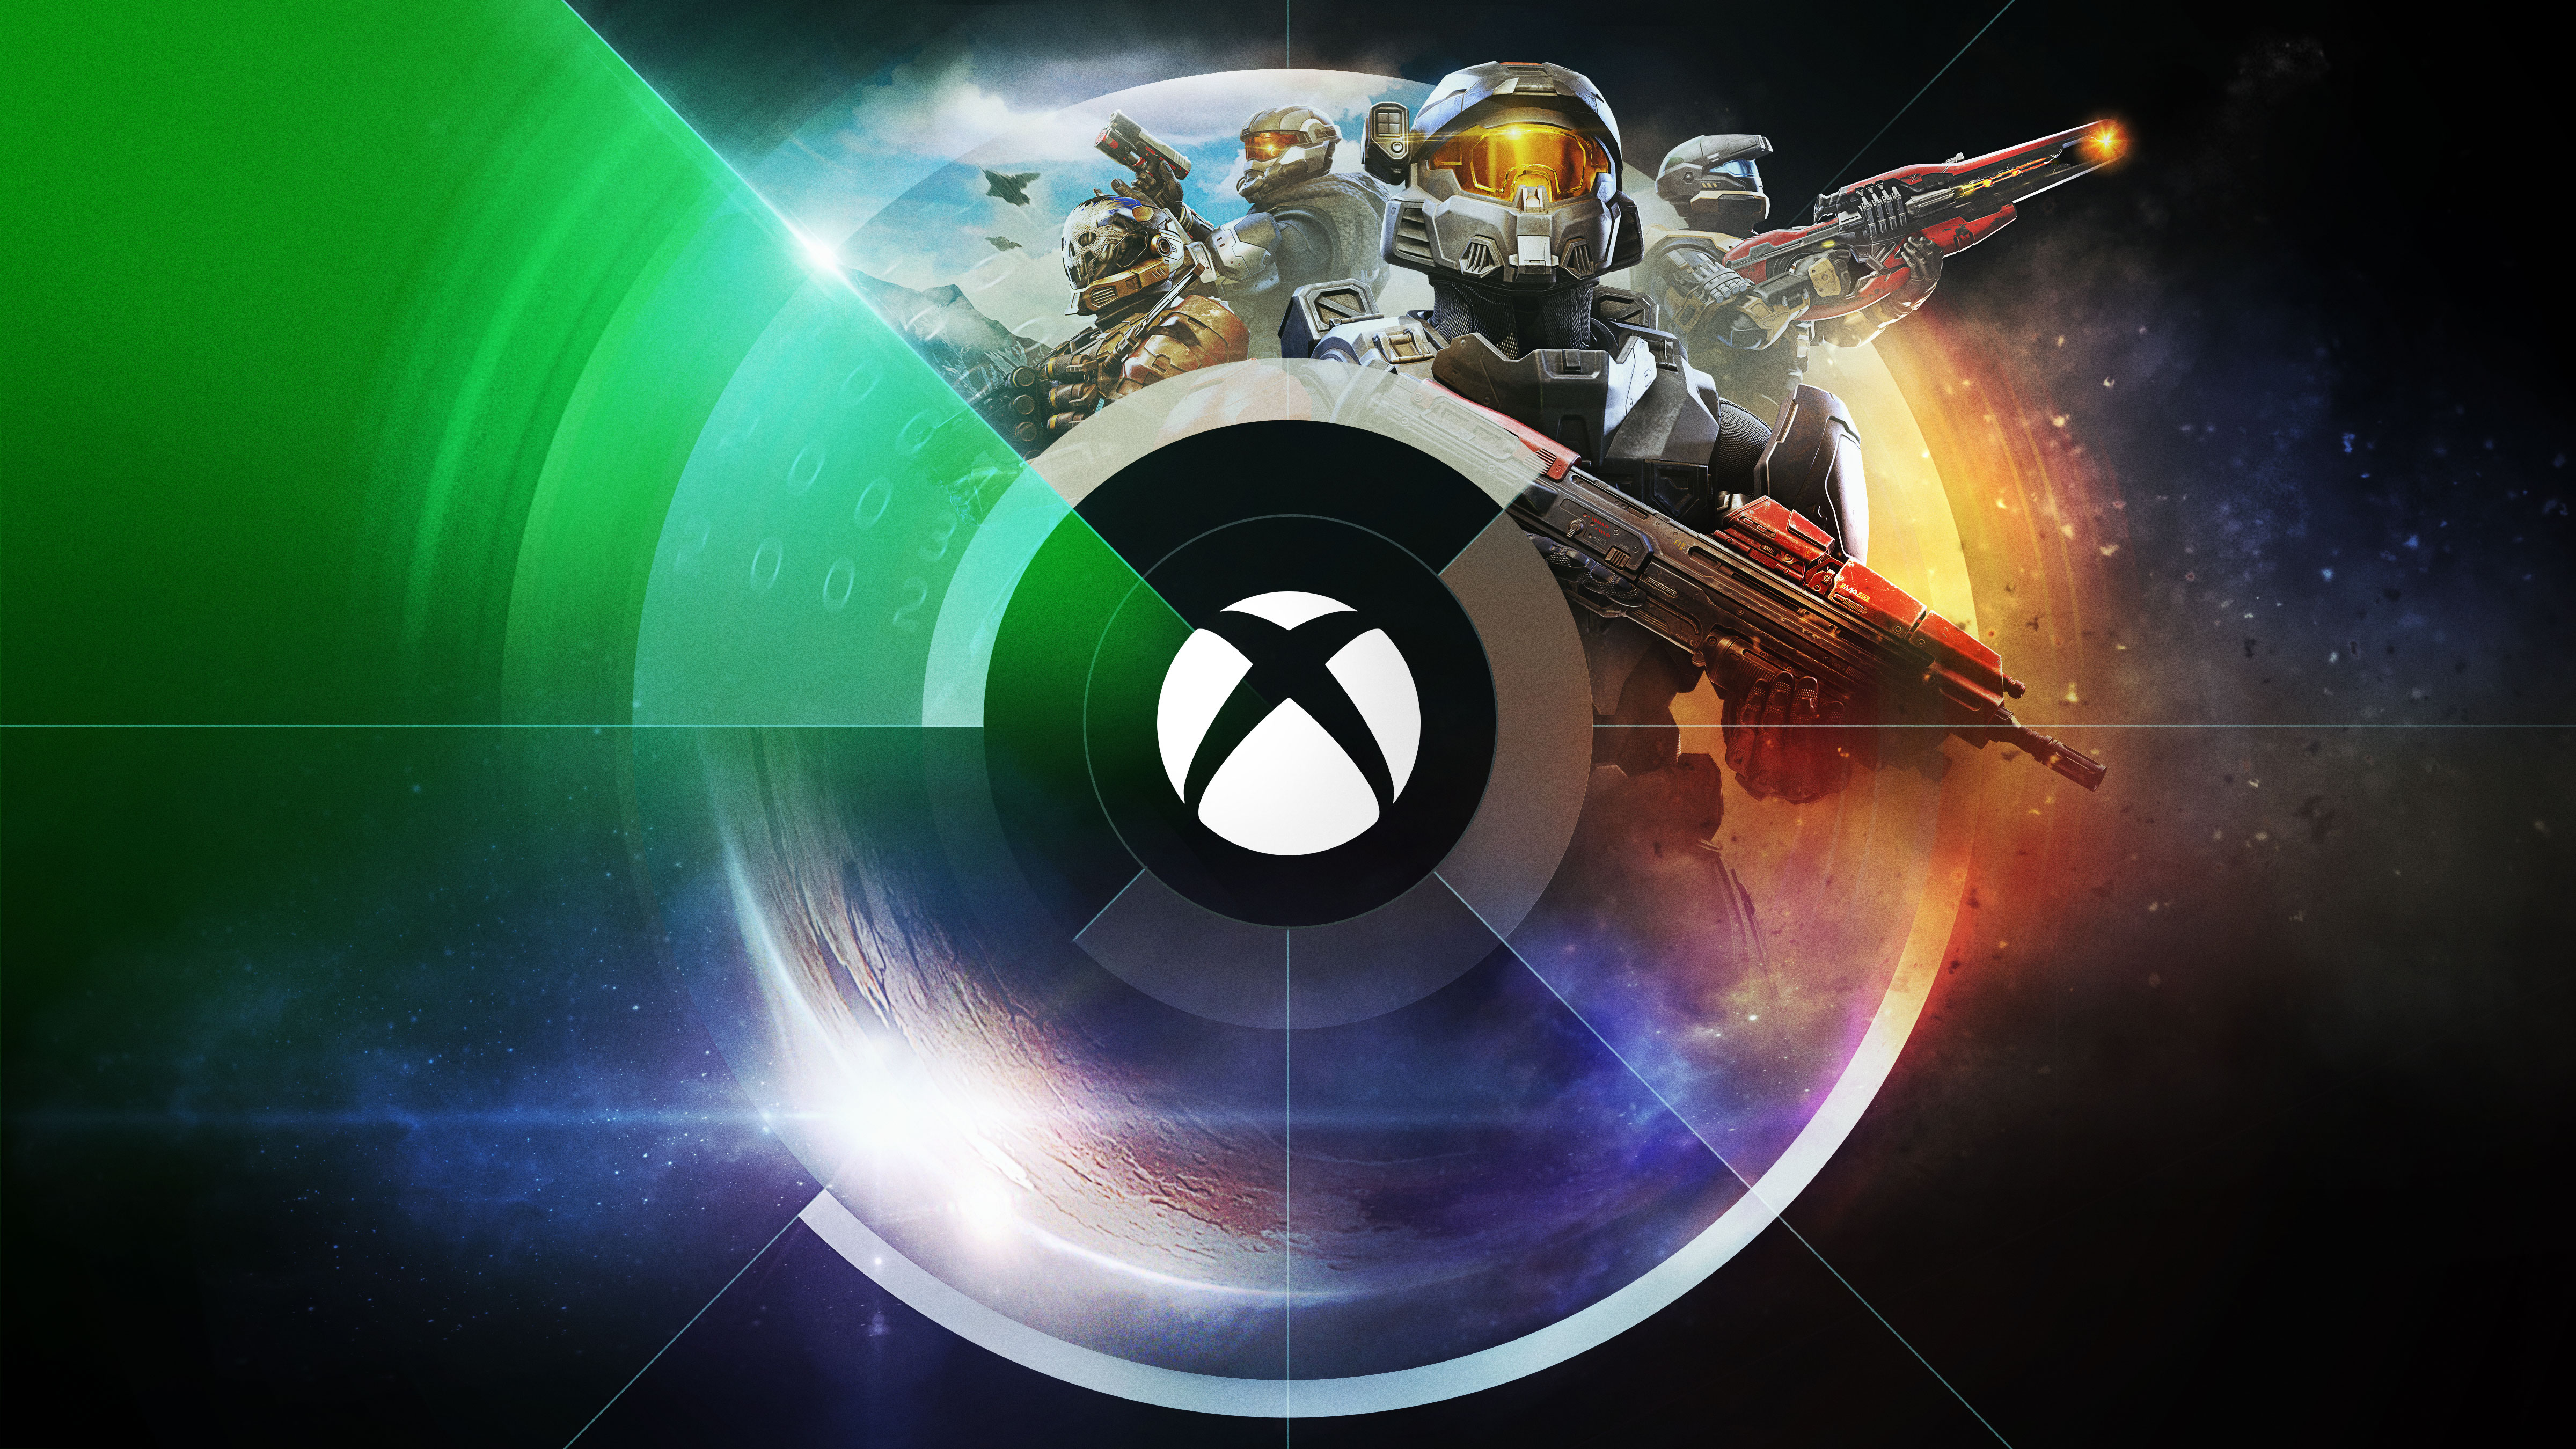 Share your gaming setup! - Gaming - XboxEra